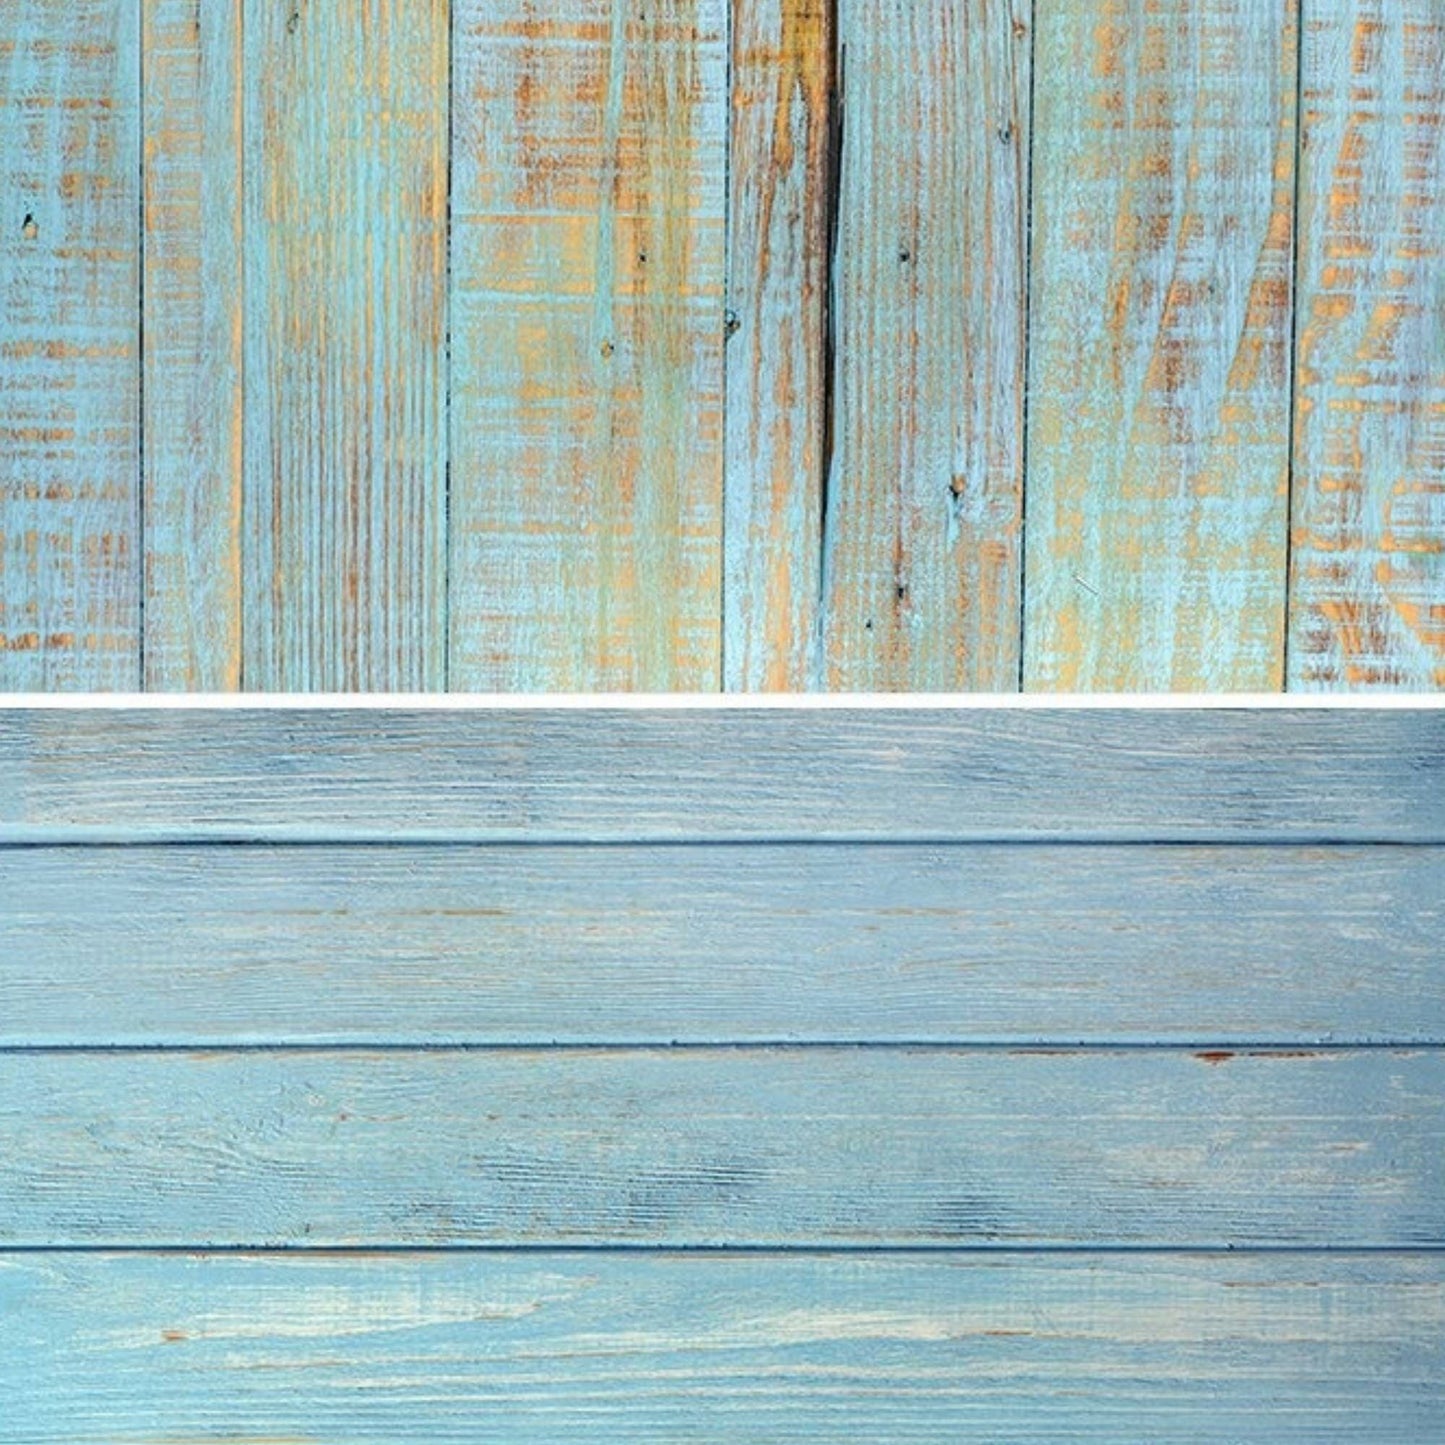 Product photography backgrounds bundle etsy, instagram photos blue wood